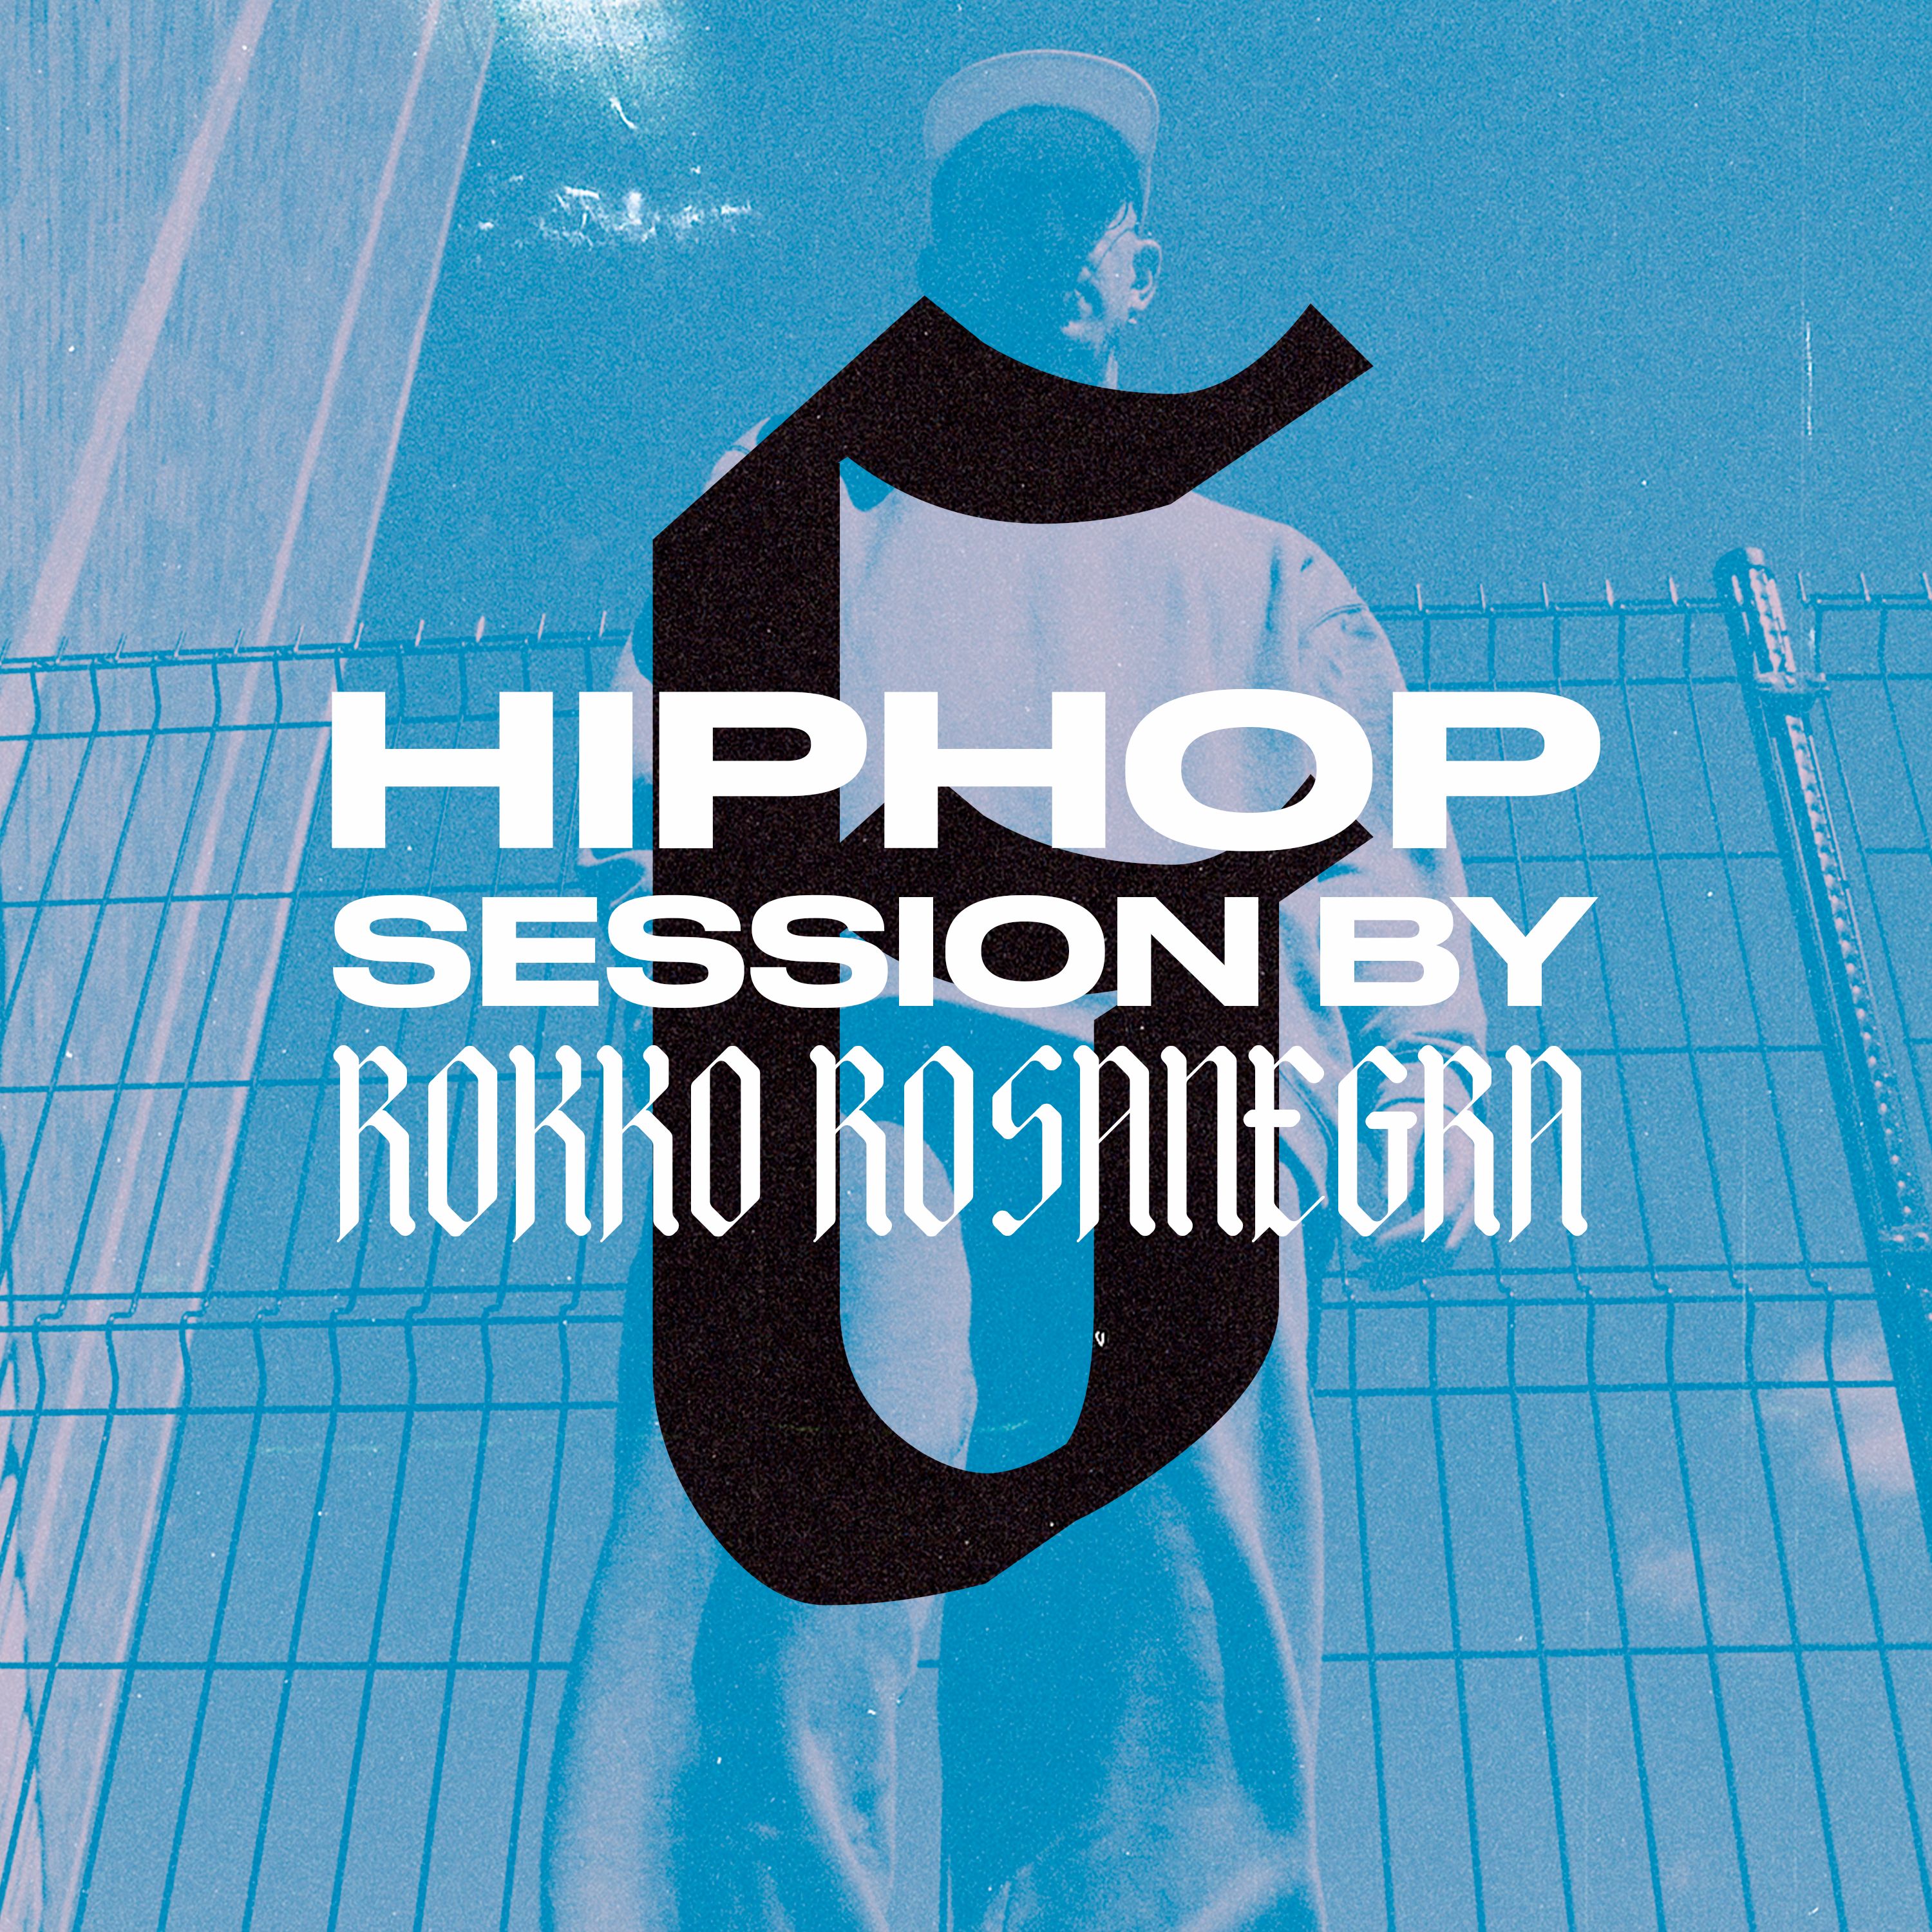 Sii mai HIP HOP SESSION 6 (DJ ROKKO ROSANEGRA)